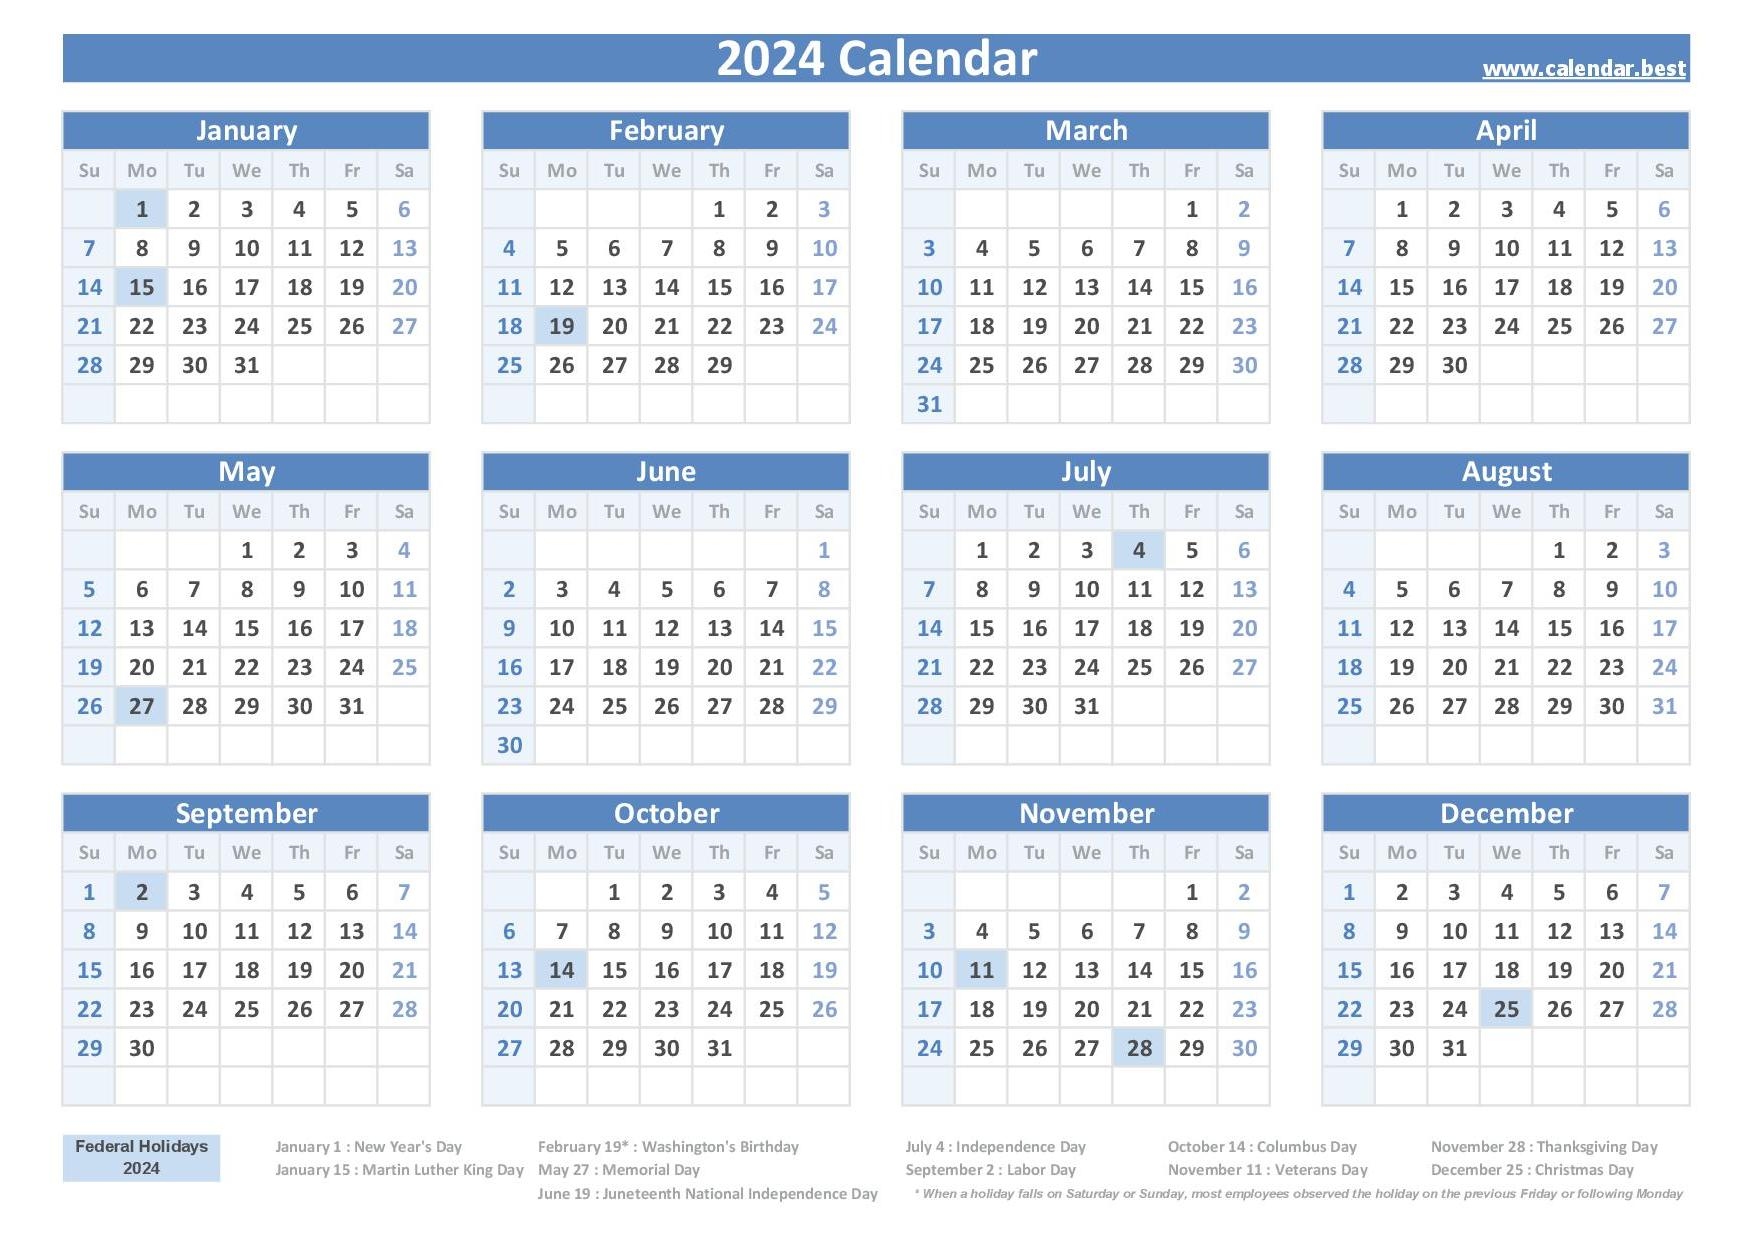 2024 Us Federal Holiday Calendar Printable Bill Marjie - Free Printable 2024 Calendar With Holidays May